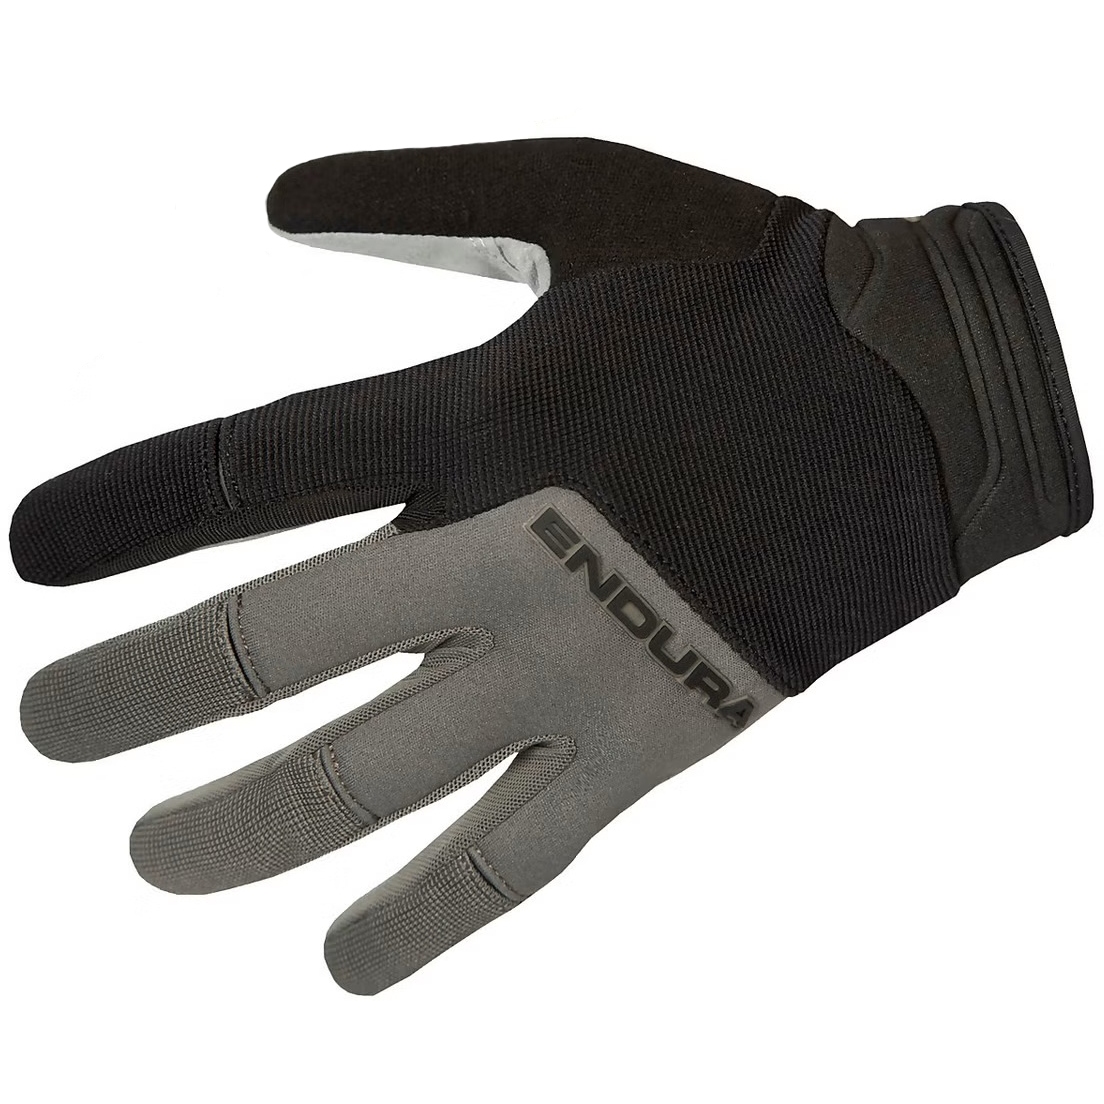 Bild von Endura Hummvee Plus II Vollfinger-Handschuhe - schwarz